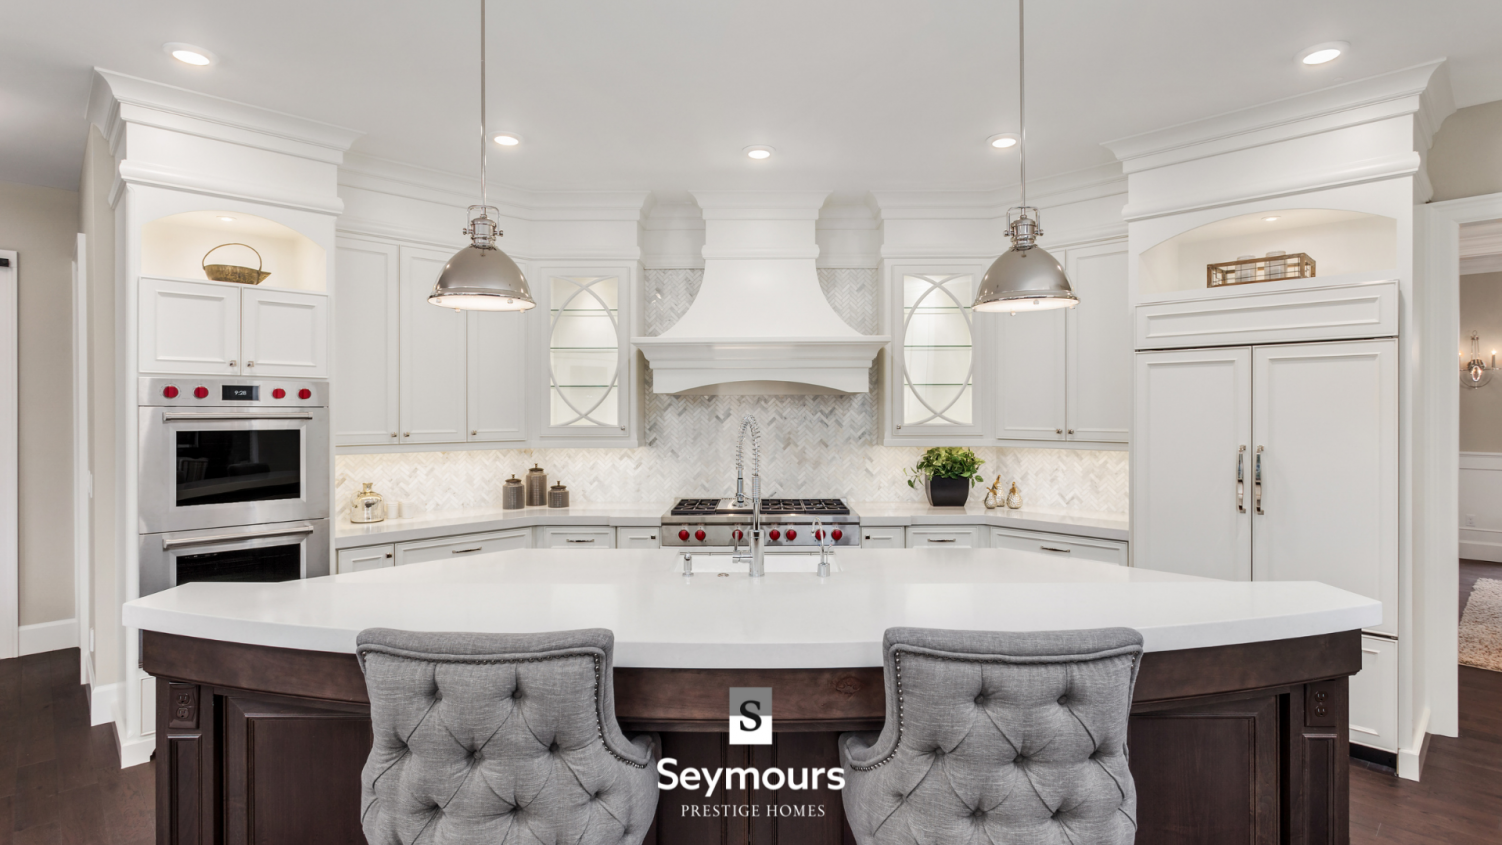 Seymours-Prestige-Homes-Surrey